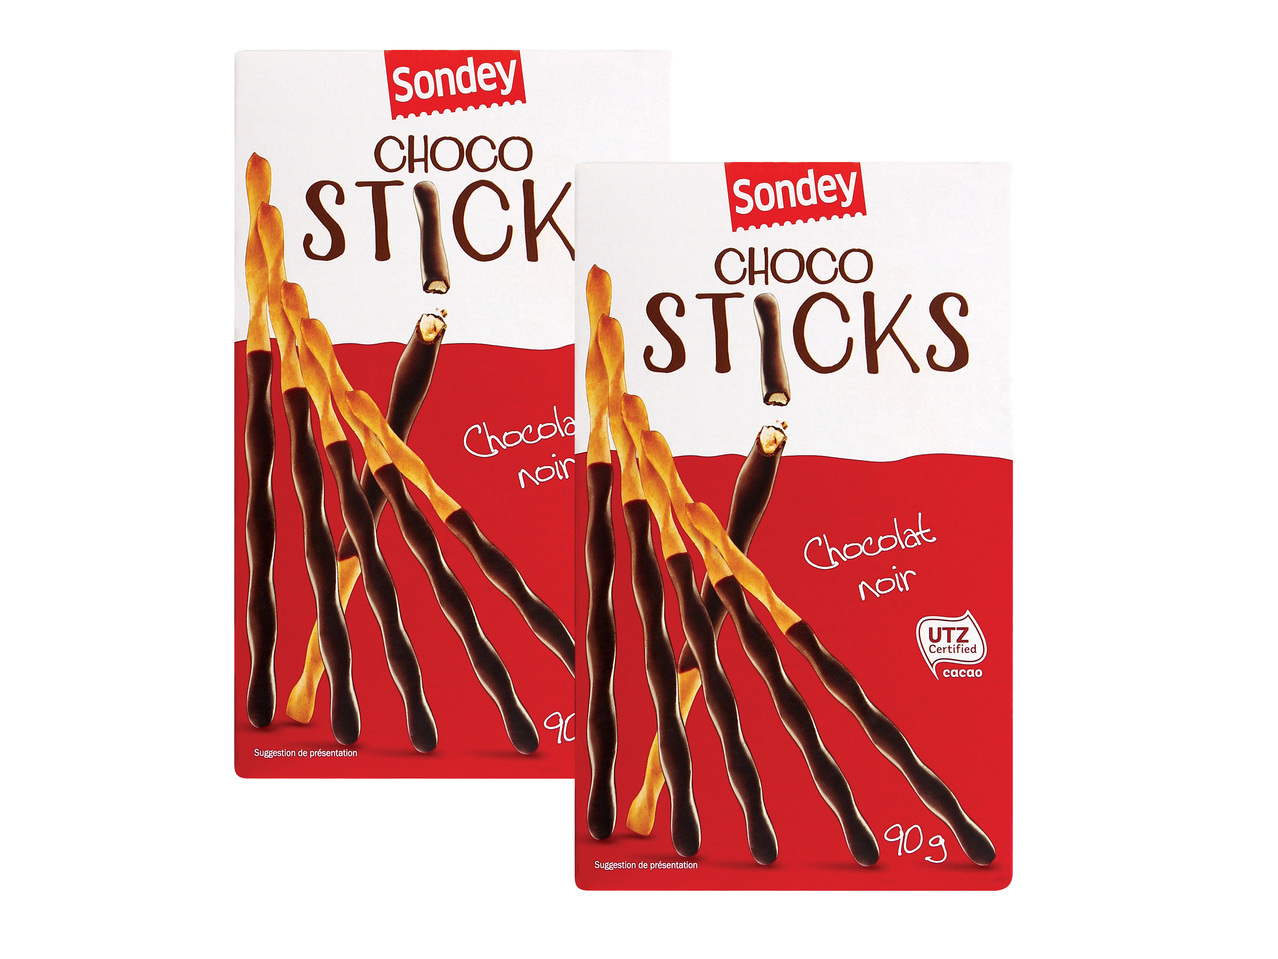 Choco sticks1